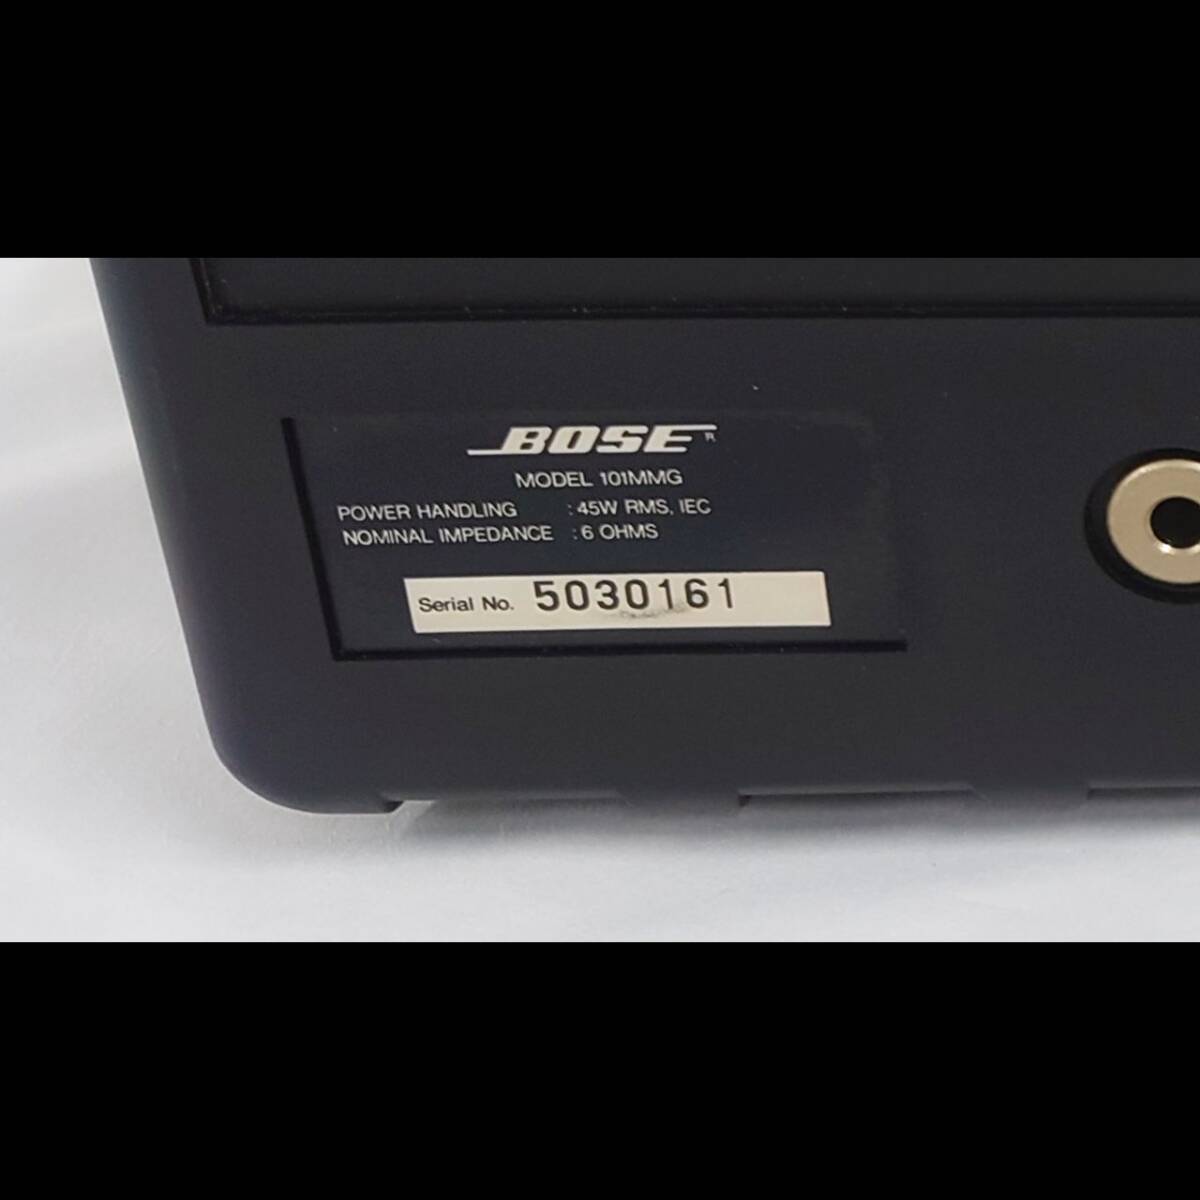 BOSE 101MMG ペア スピーカー ステー付き 基本動作のみ確認済の画像5